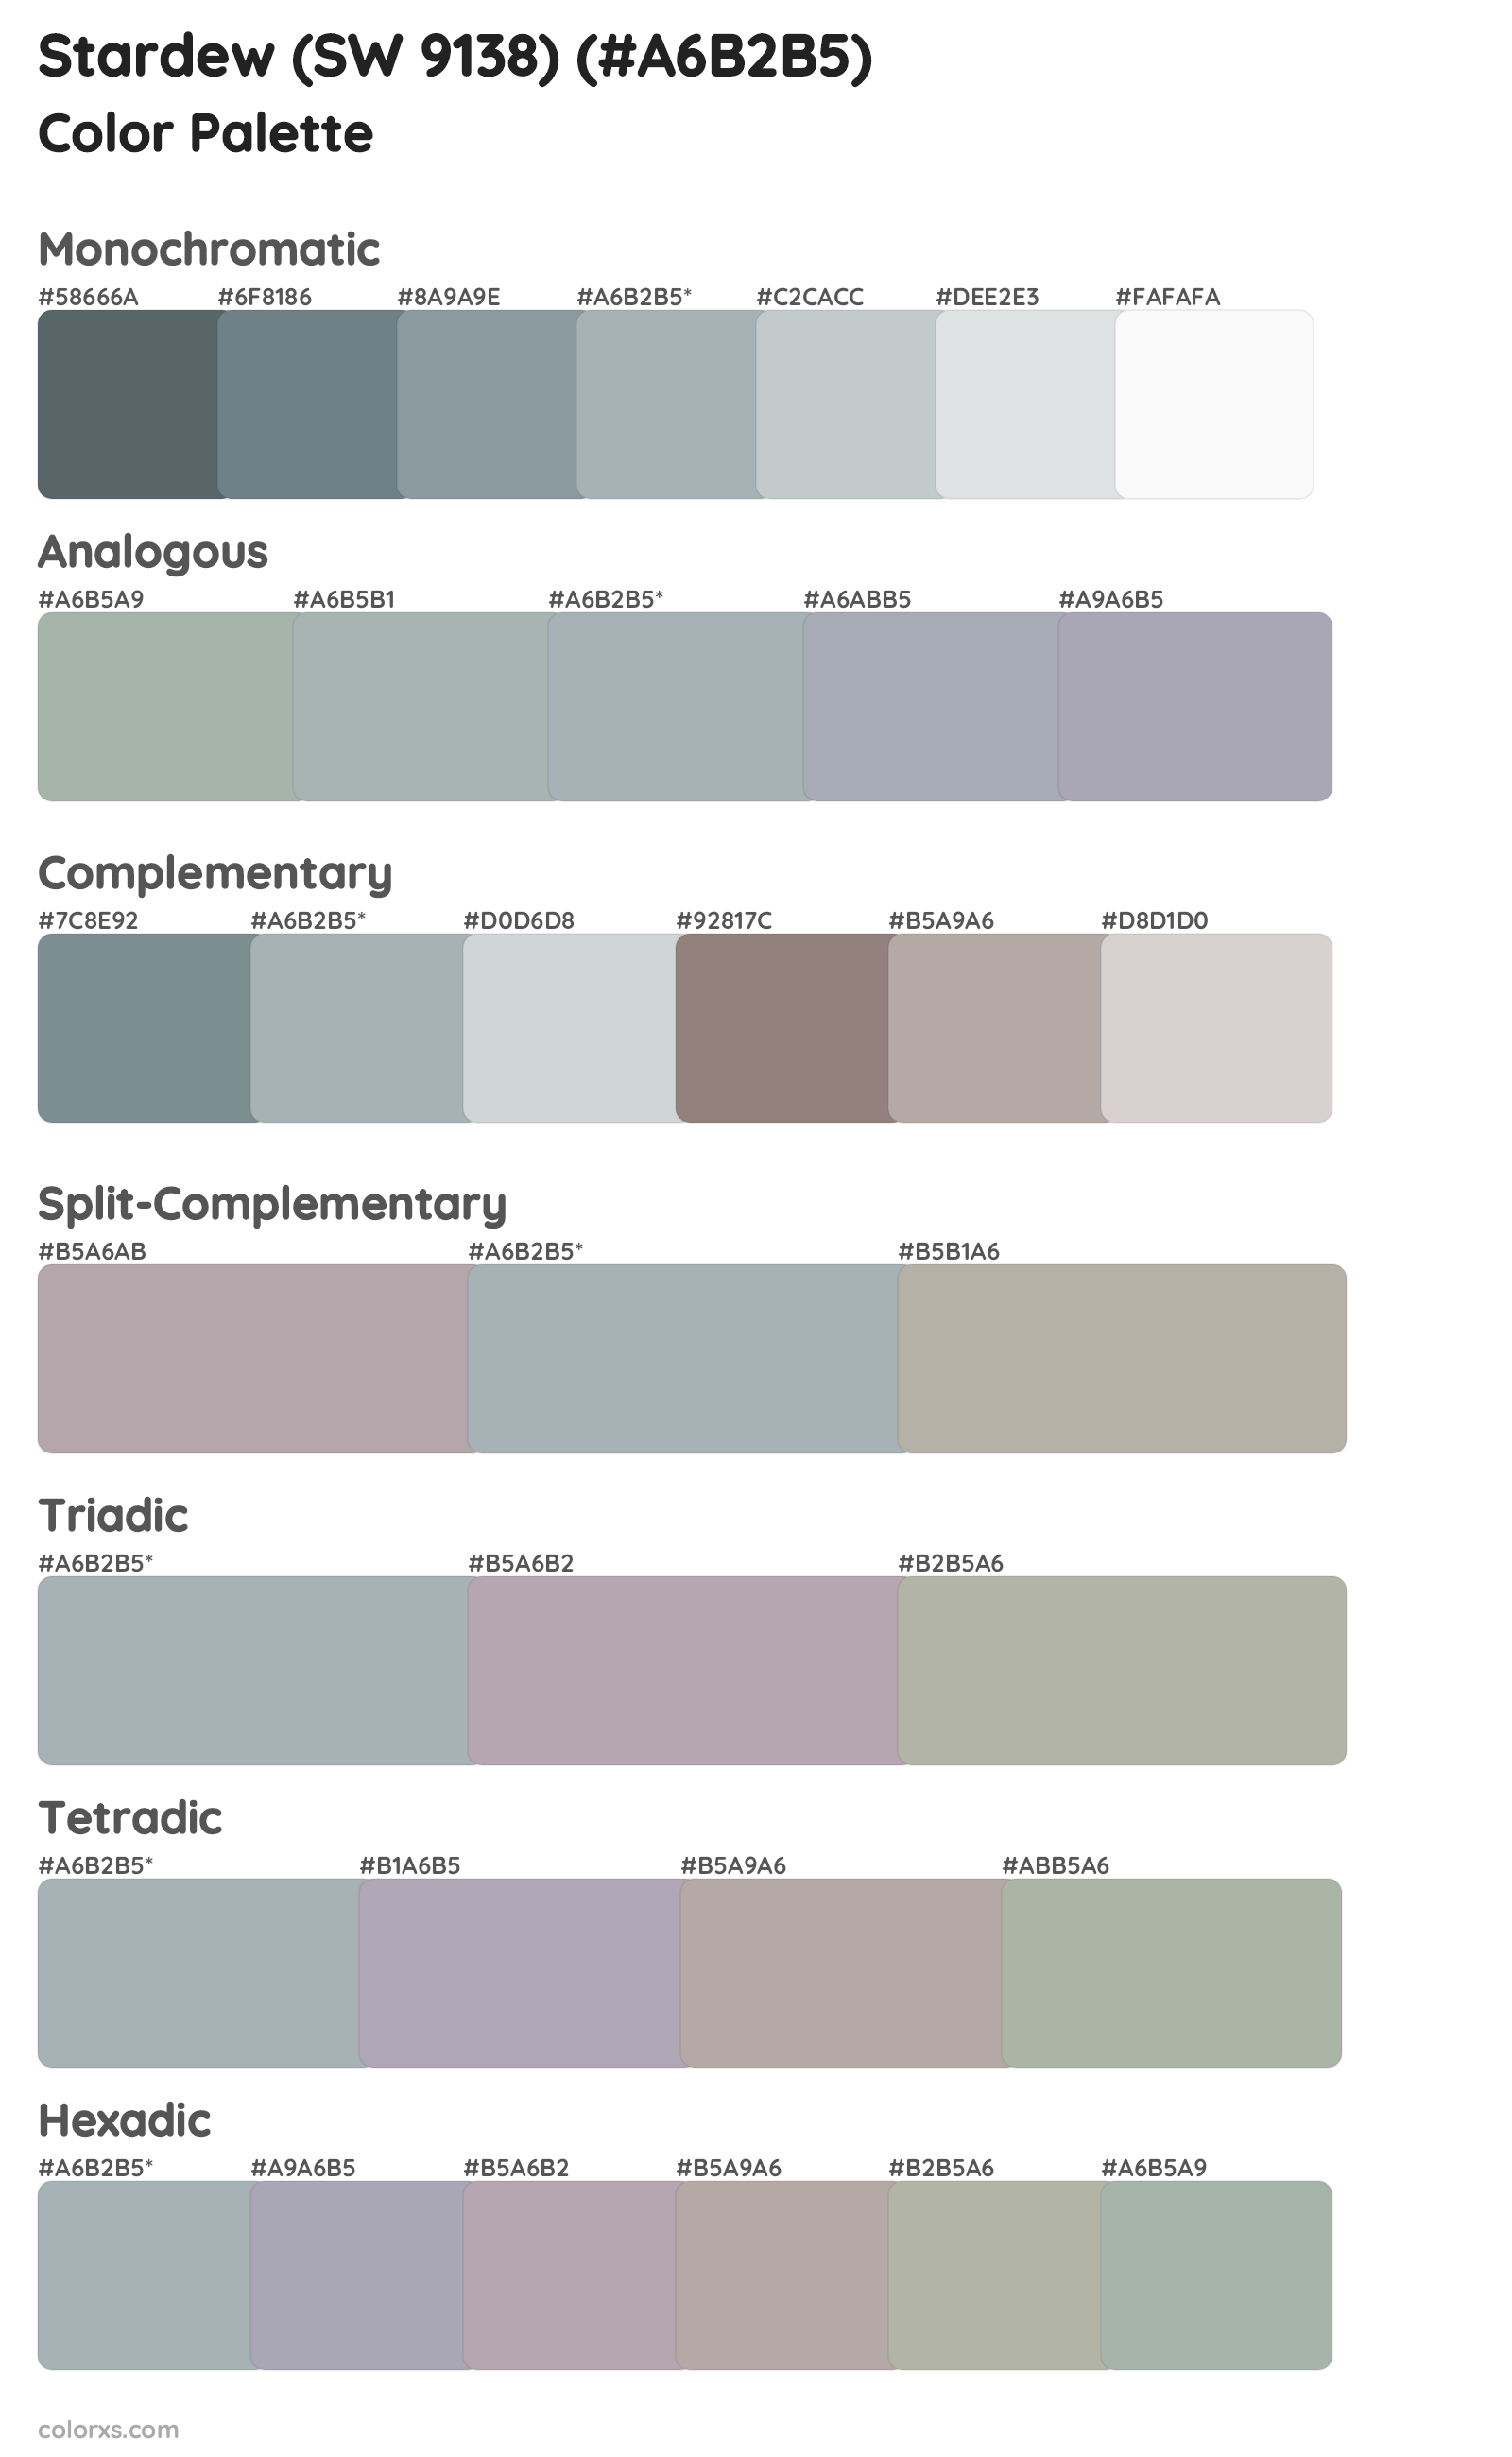 Stardew (SW 9138) Color Scheme Palettes